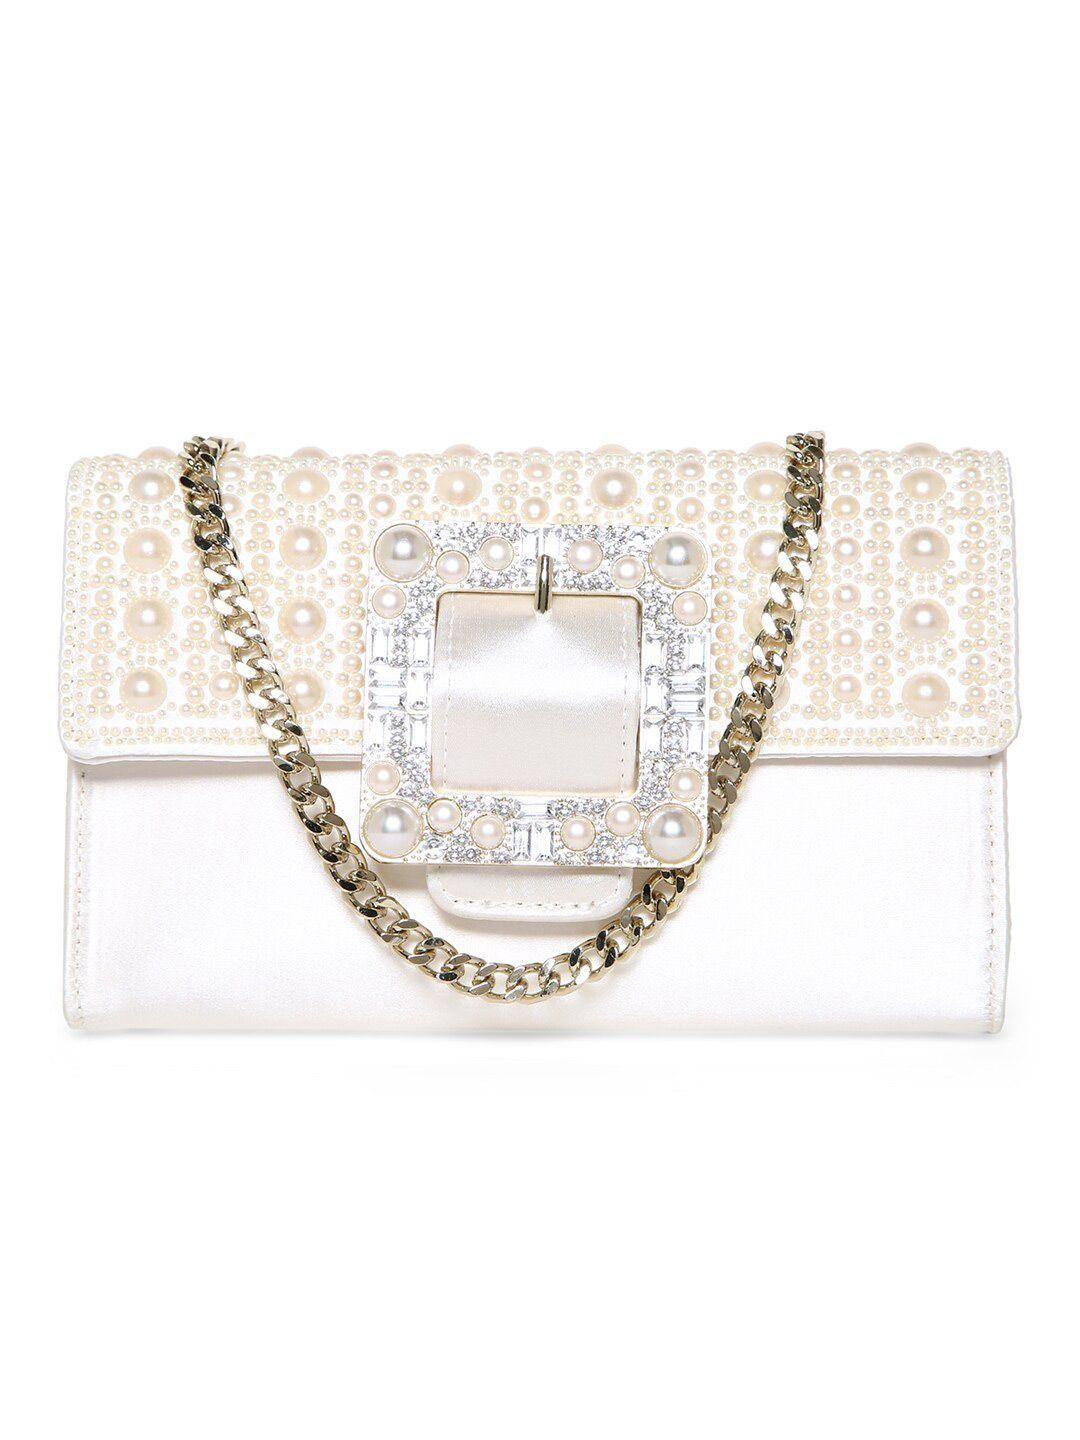 aldo embellished purse clutch